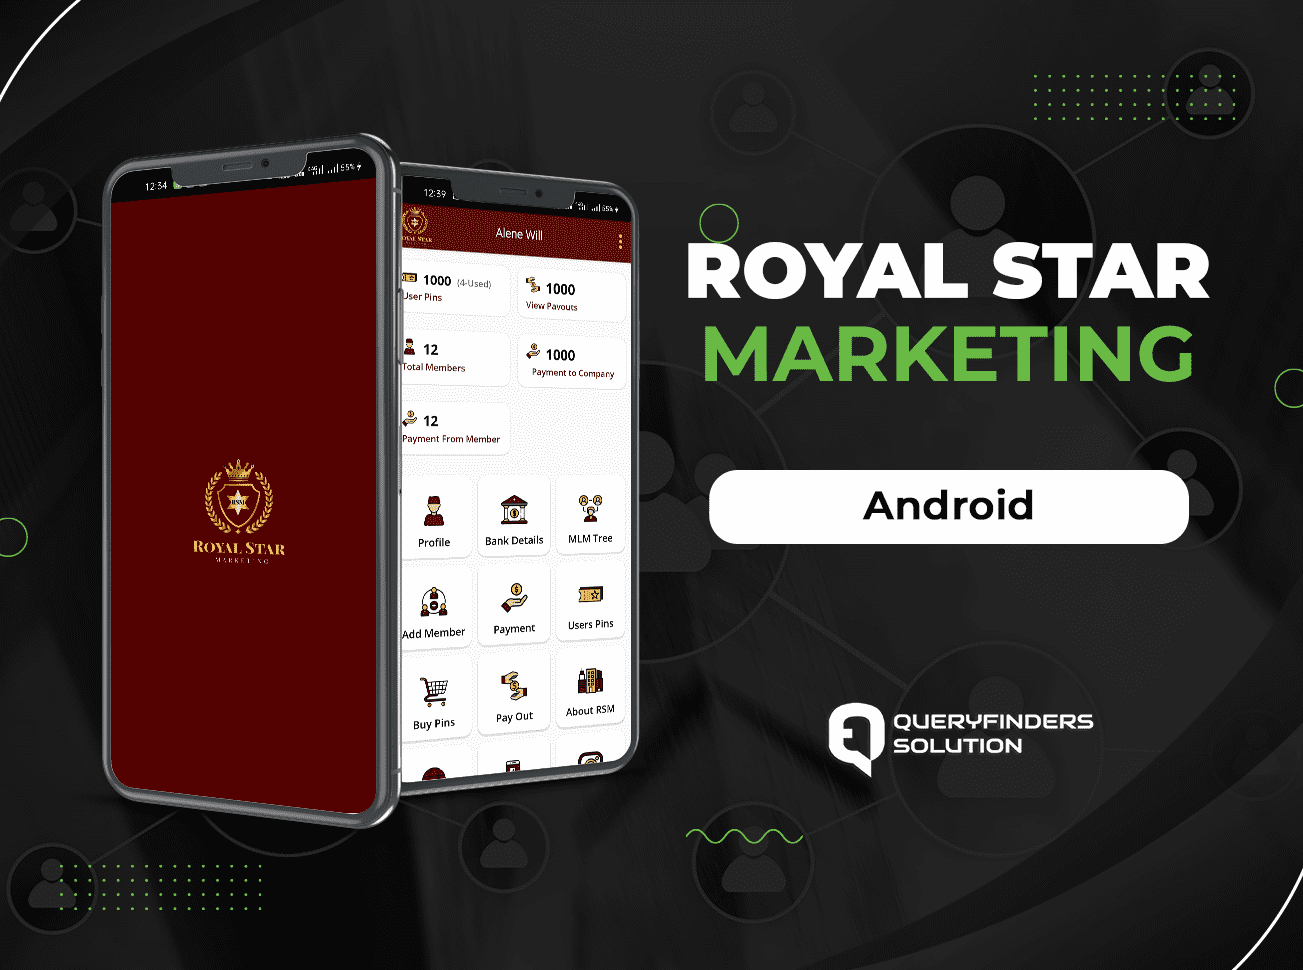 Royal Star Marketing